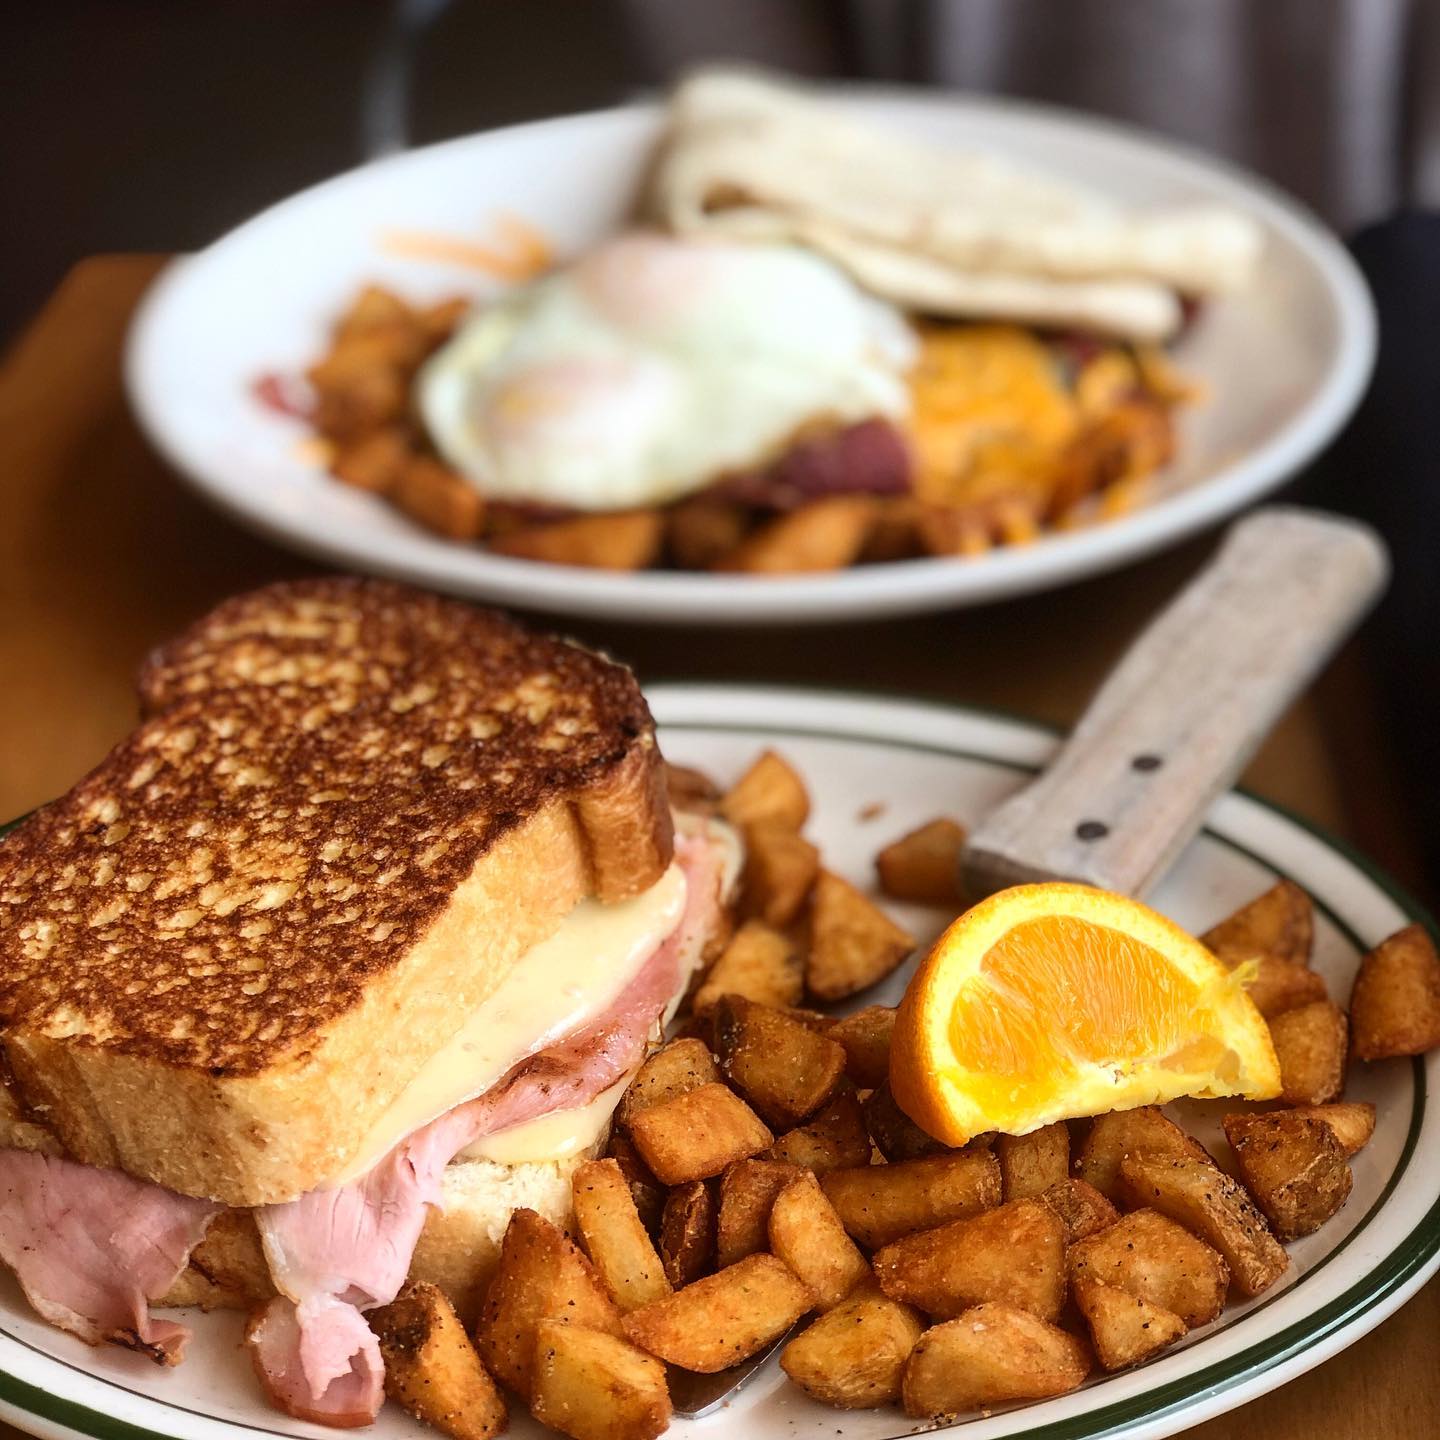 Plate of ptoatos and breakfast sandwich. Photo by Instagram user @wandering_fatties